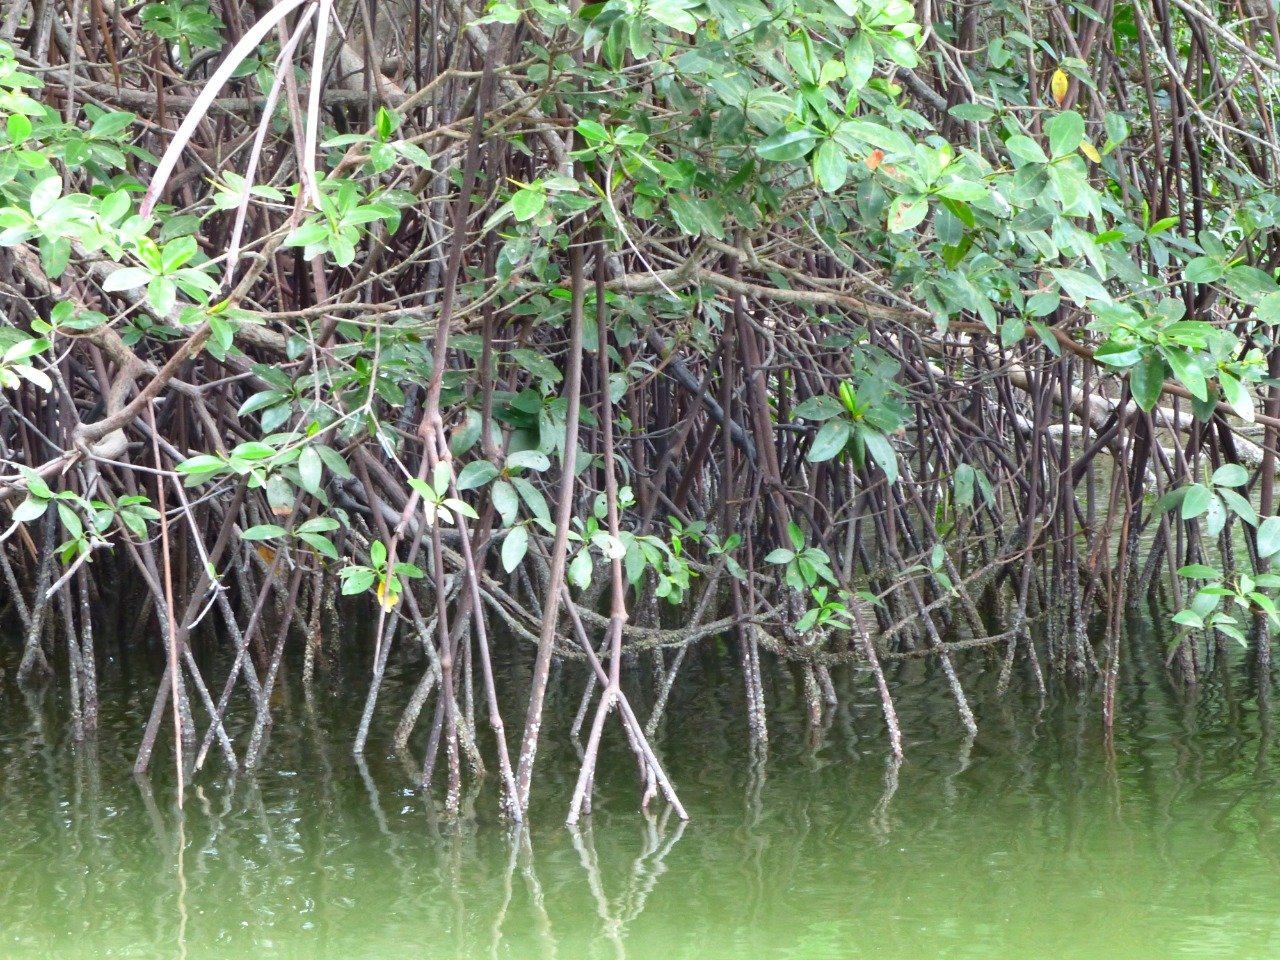 Mangrove roots in Ecuador